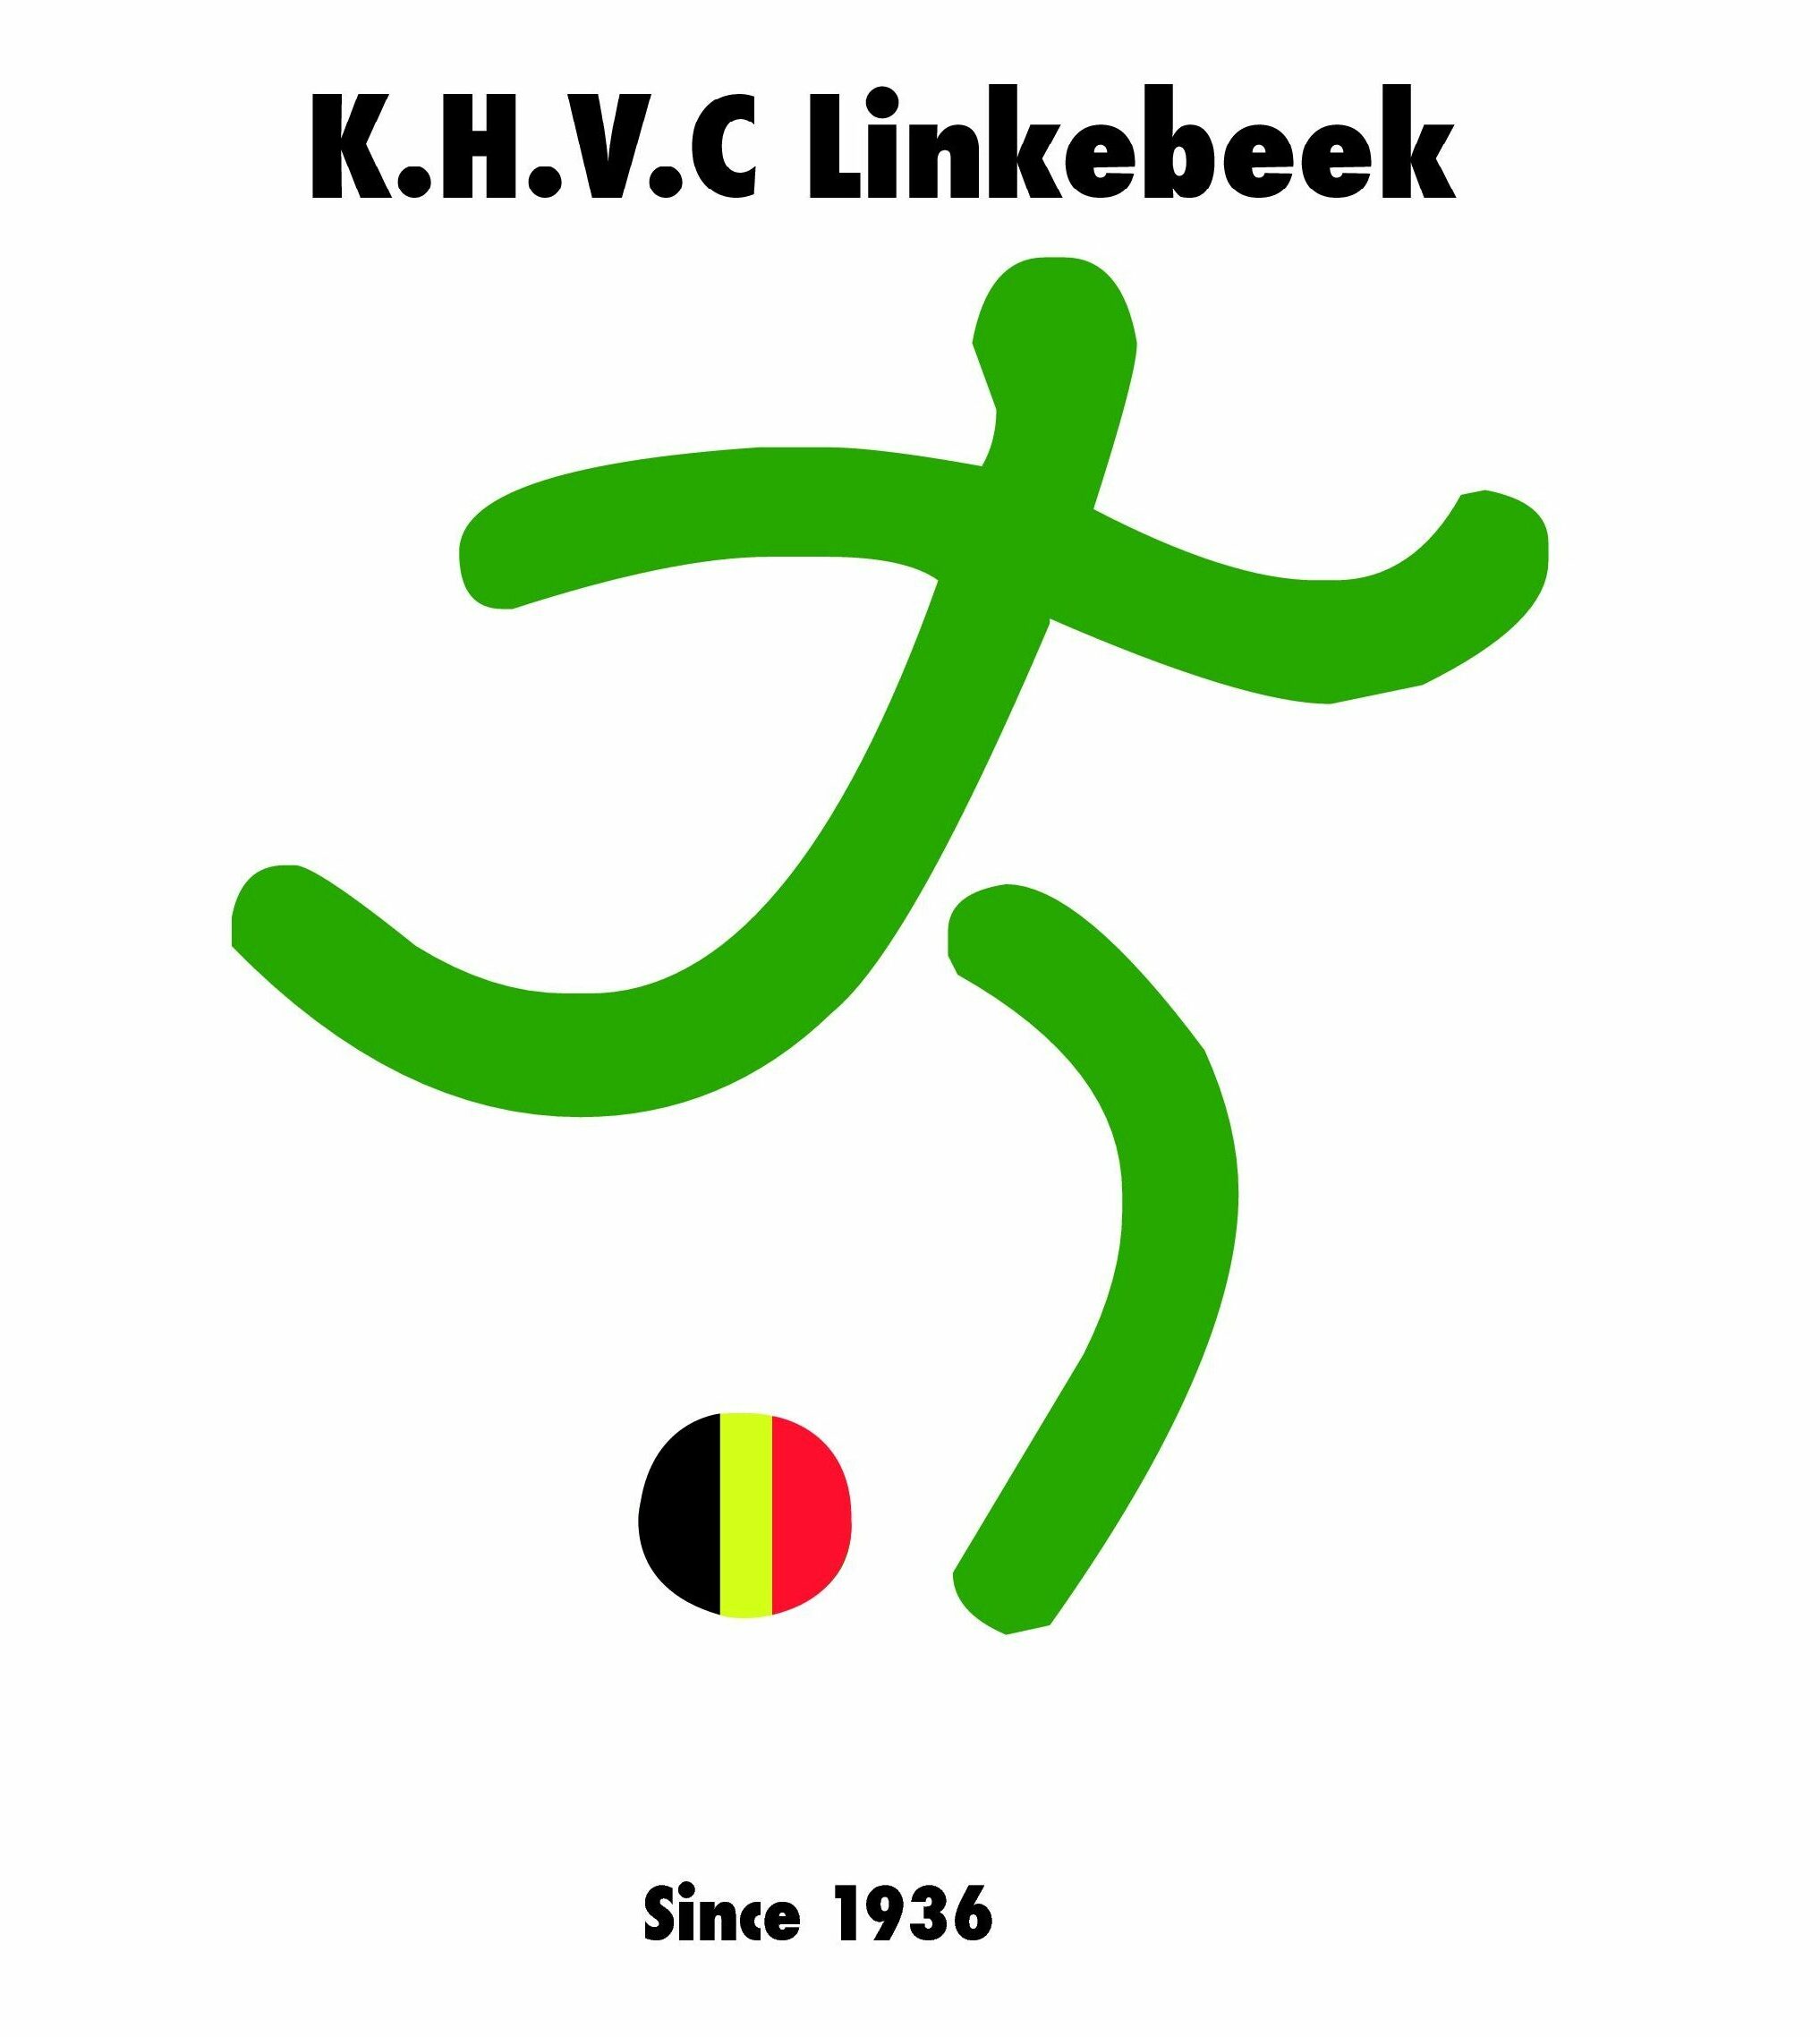 K.H.V.C. Linkebeek